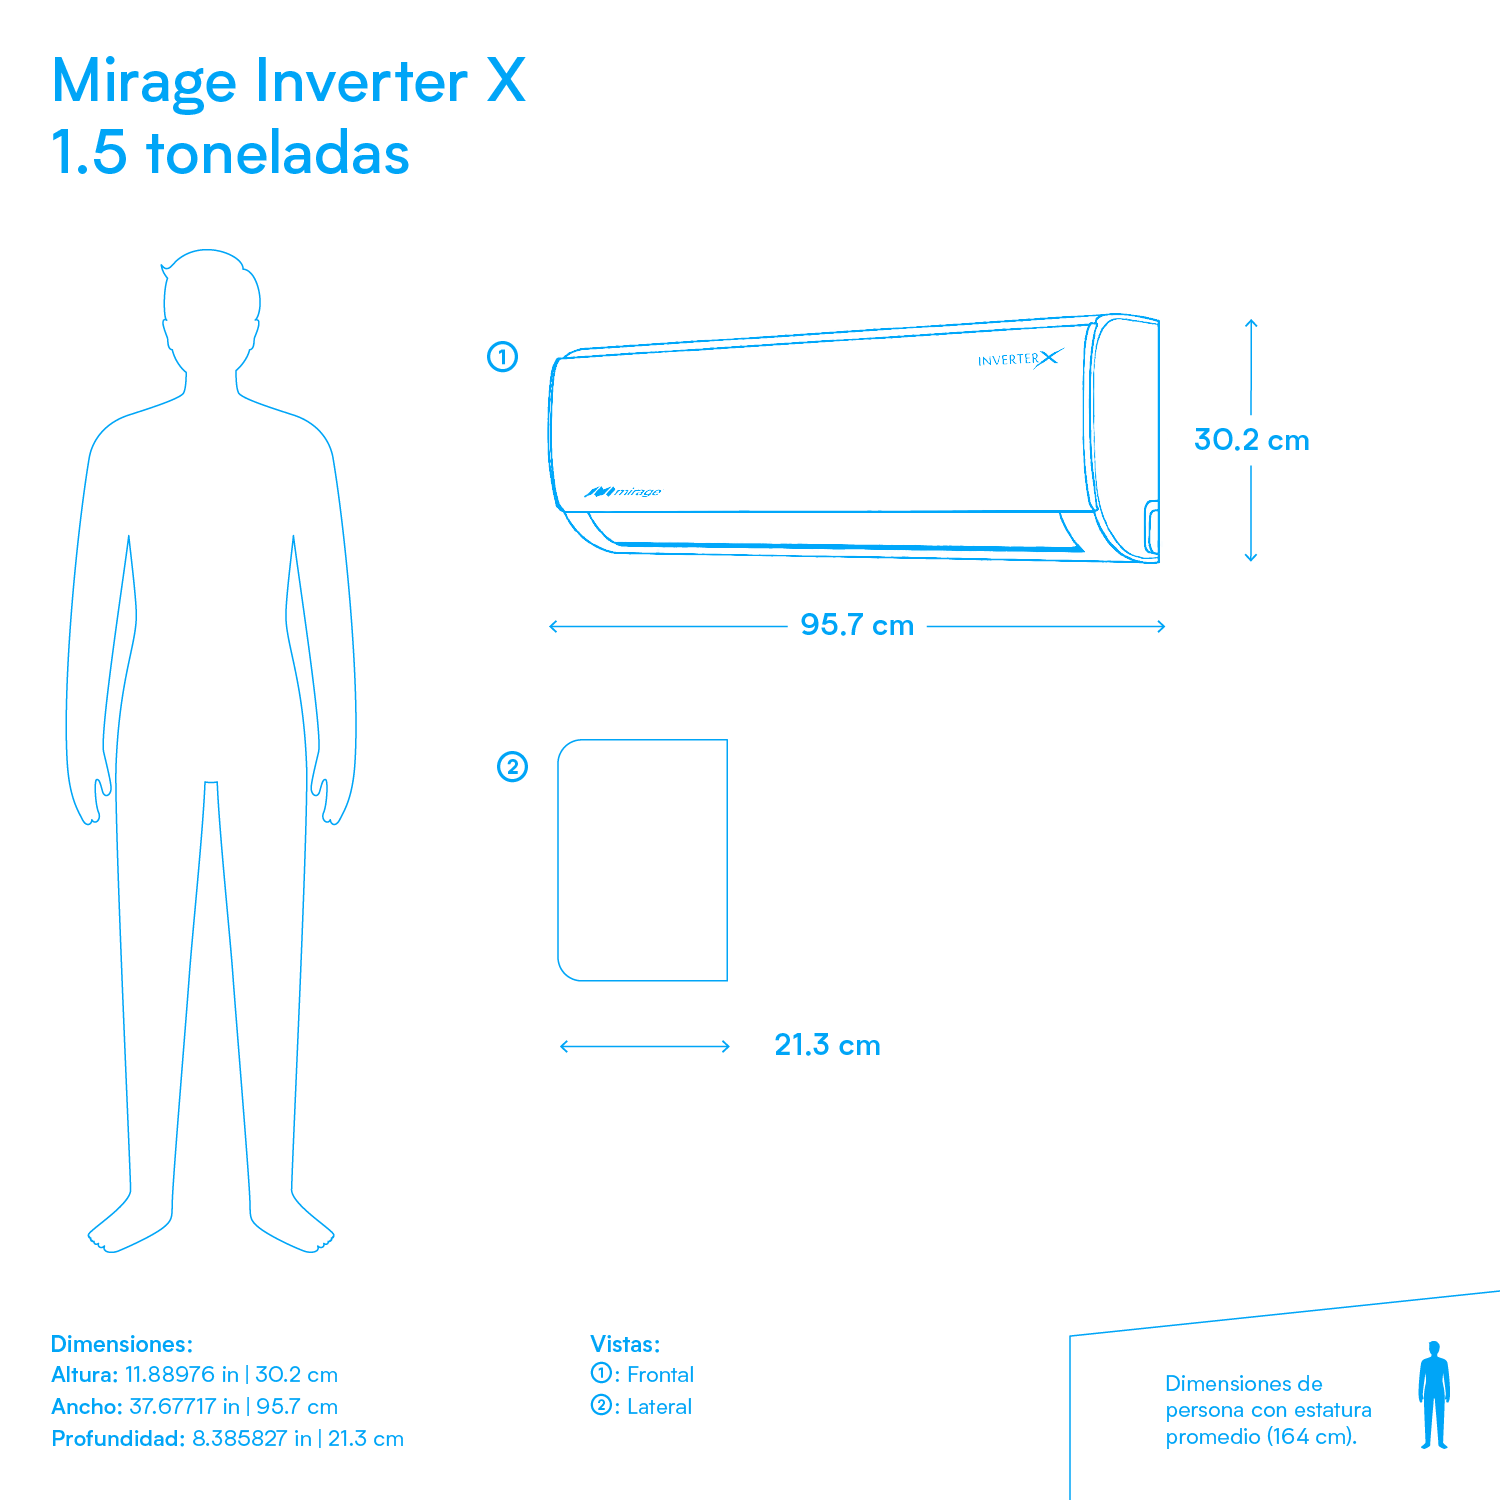 Minisplit Mirage Inverter X - 1.5 toneladas - 220v